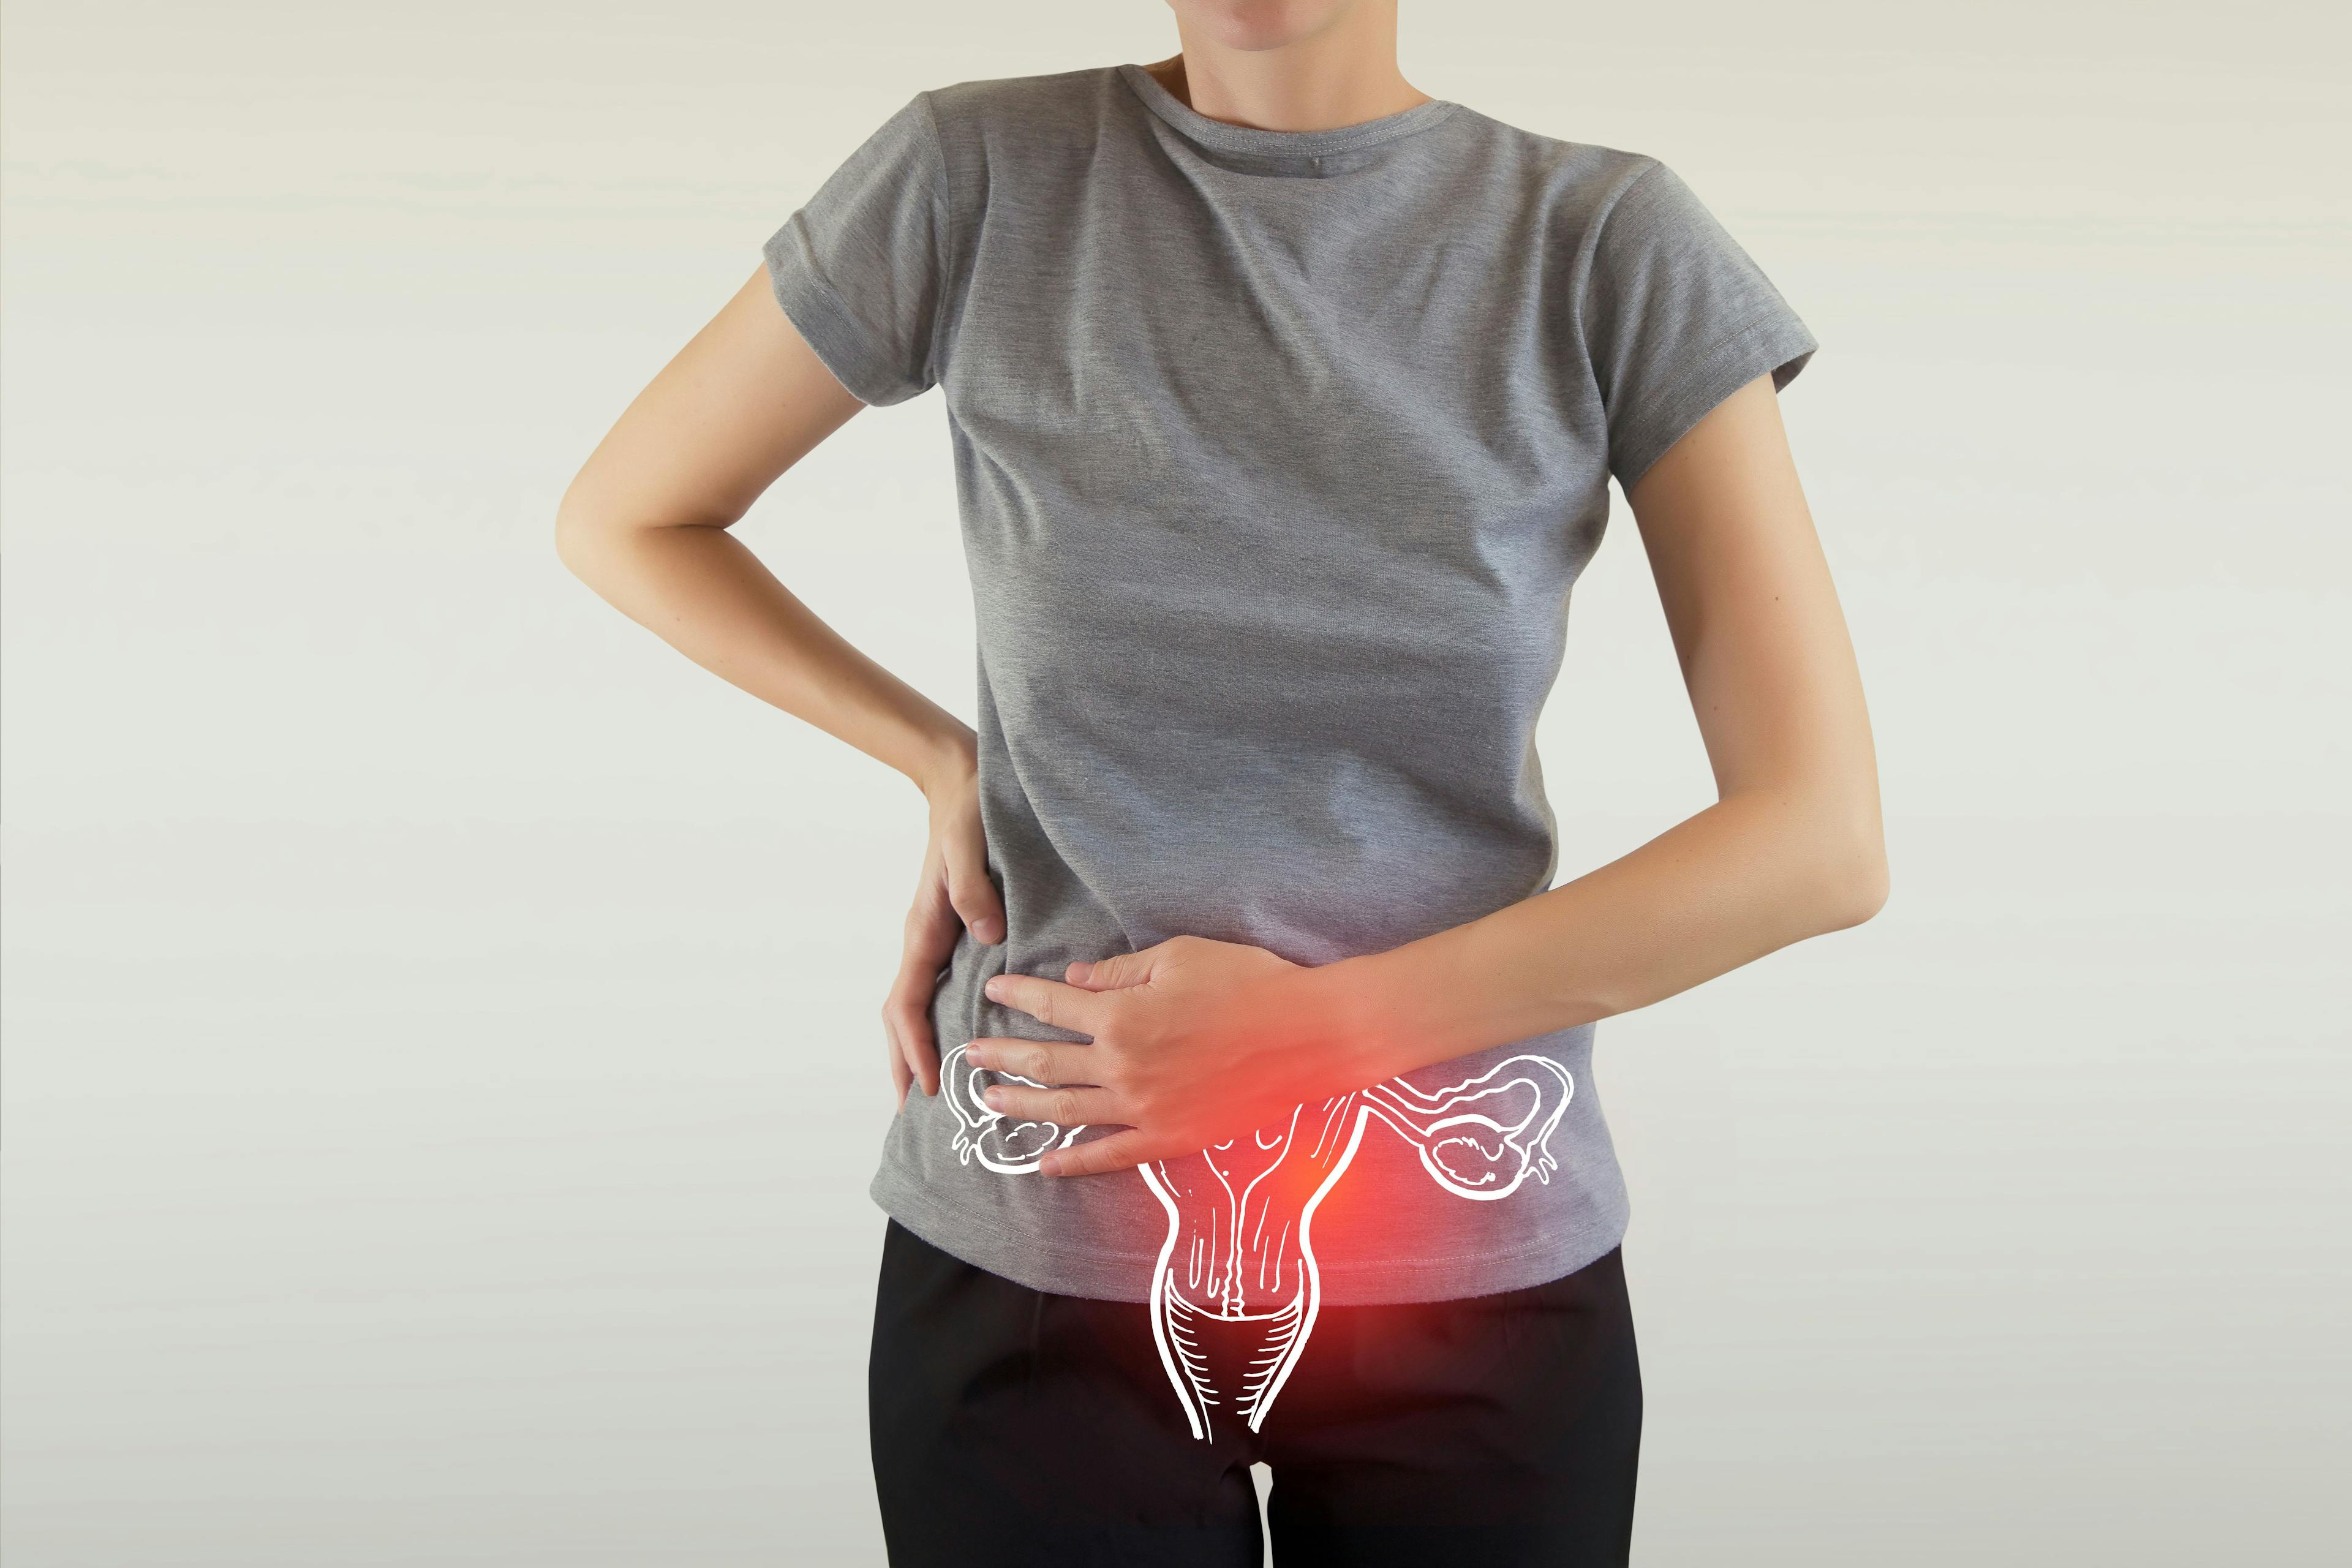 Female Reproductive System Anatomy - Image credit: mi_viri | stock.adobe.com